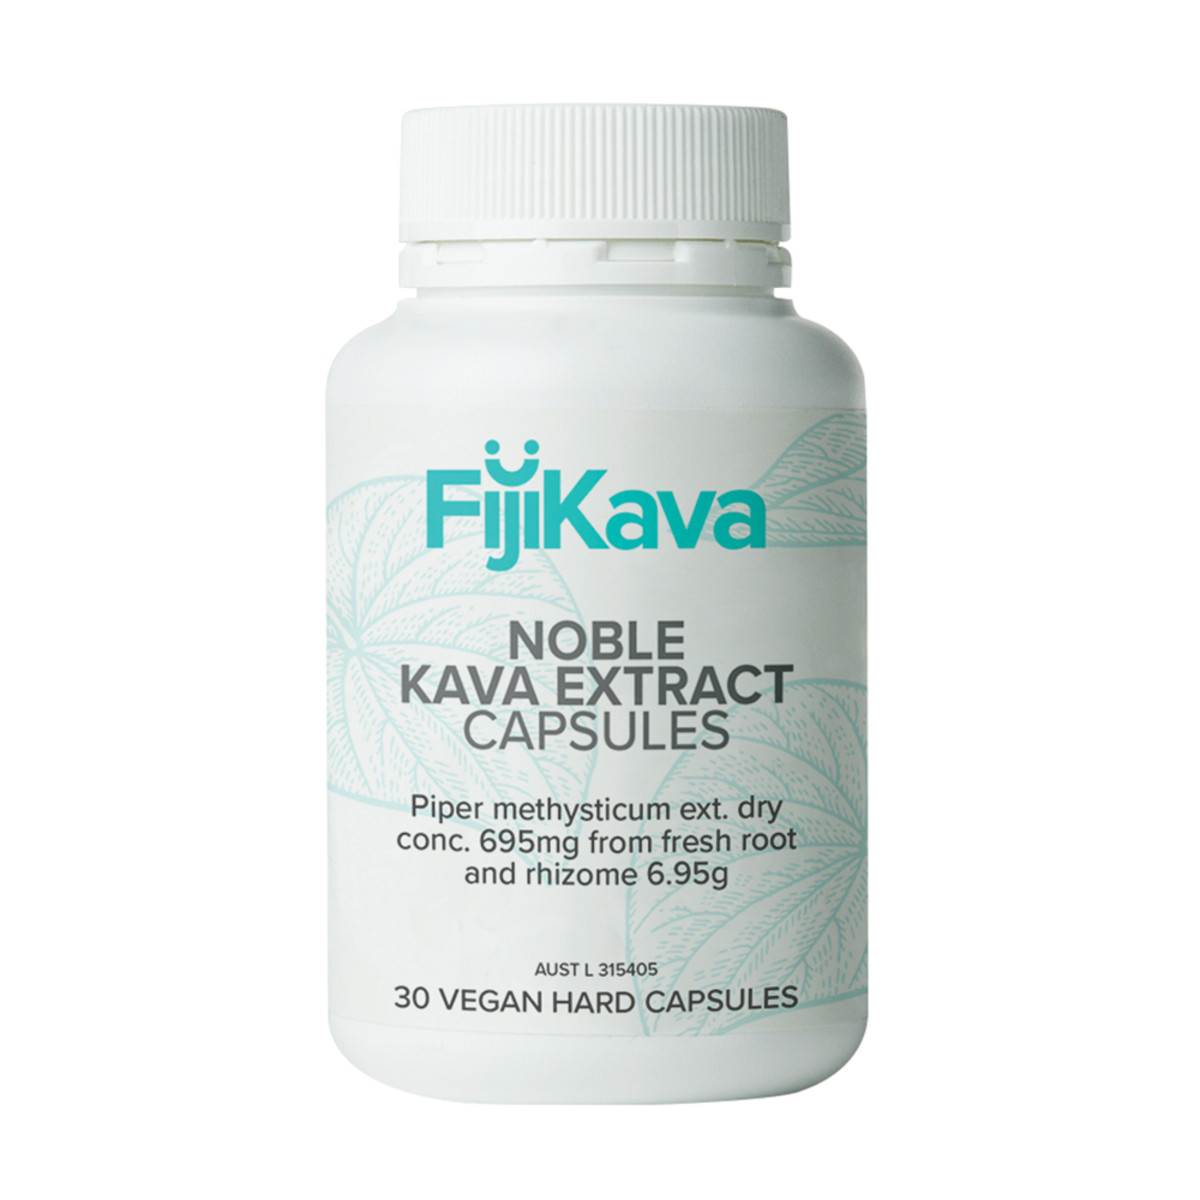 Fiji Kava Noble Kava Extract Capsules 30vc